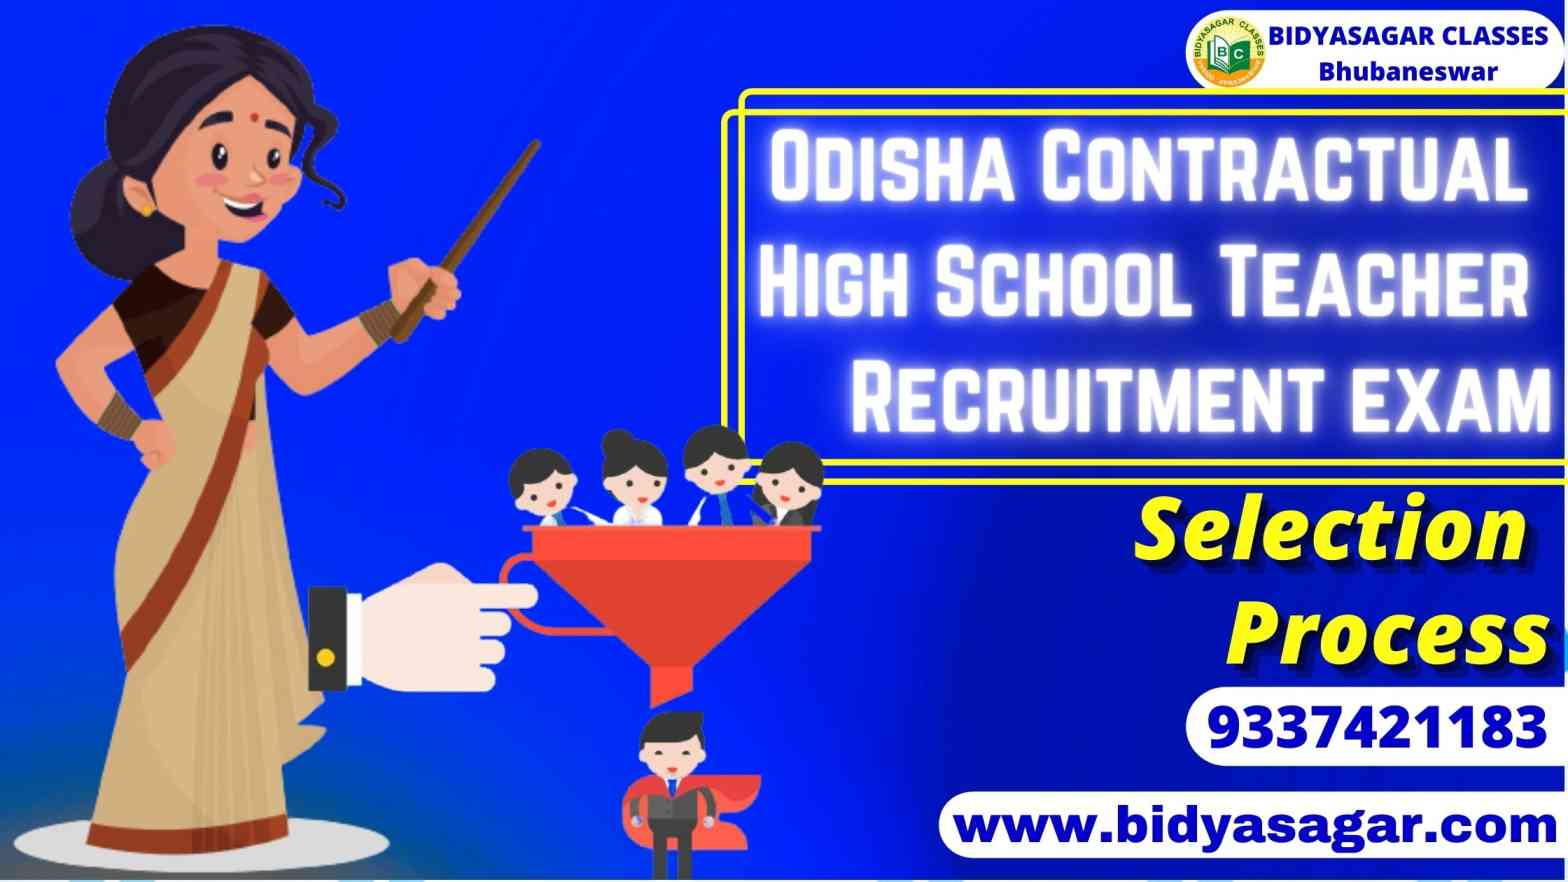 Odisha Contractual High School Teacher Recruitment Exam 2022 Selection Process